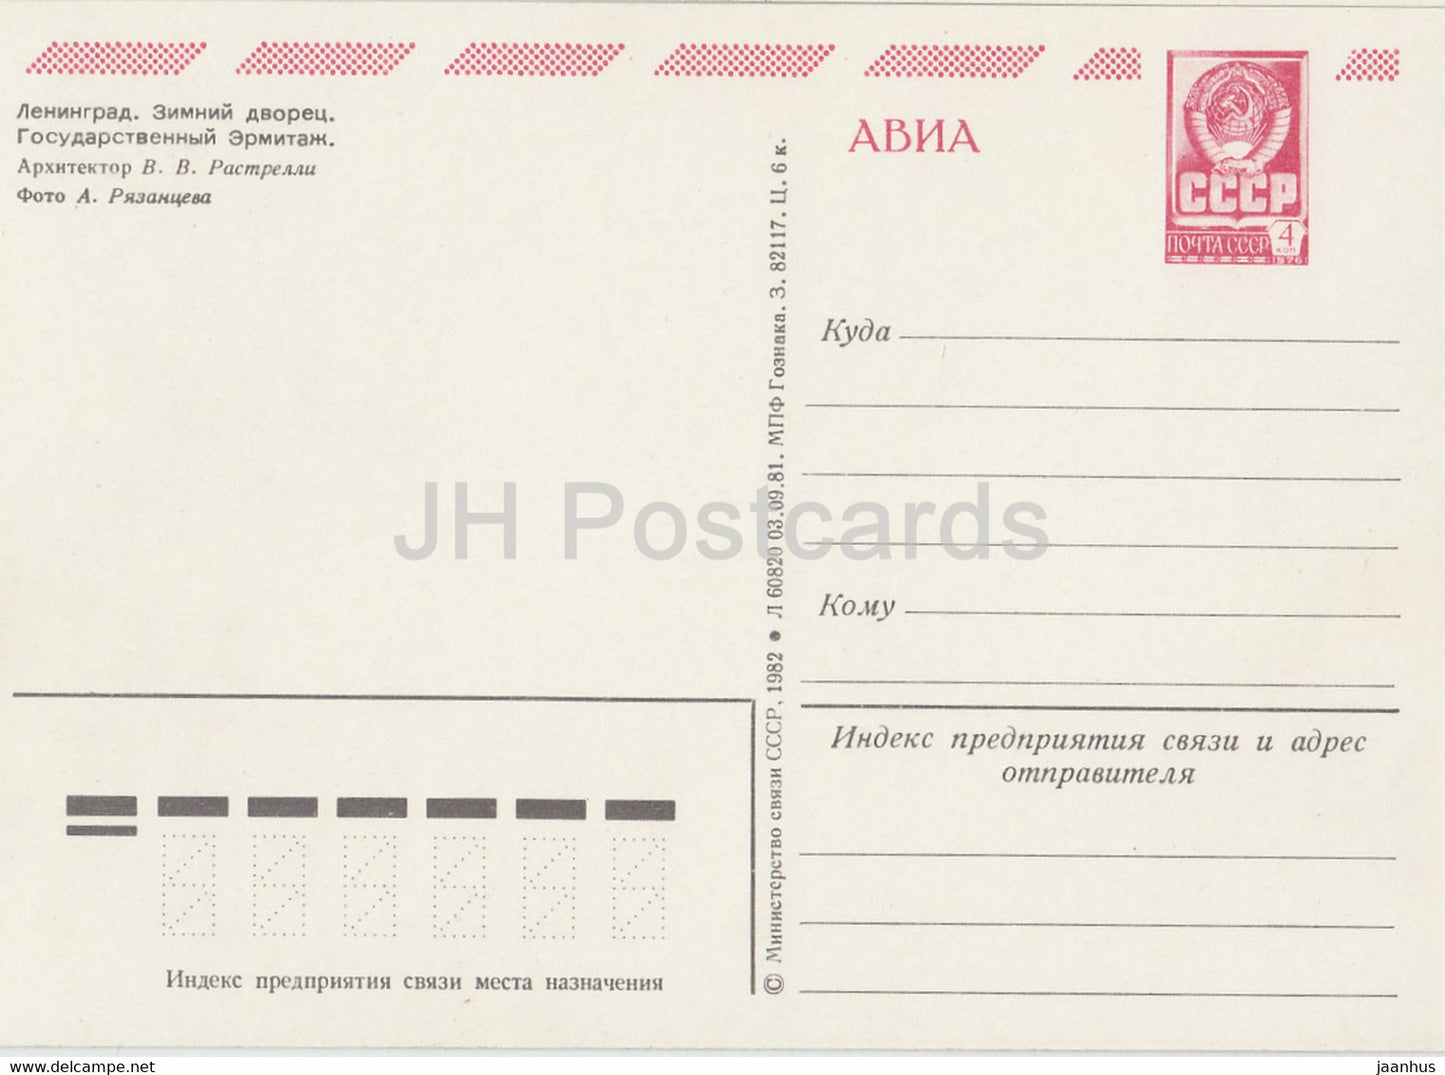 Leningrad - St Petersburg - Winter Palace - State Hermitage - ship - postal stationery - 1982 - Russia USSR - unused